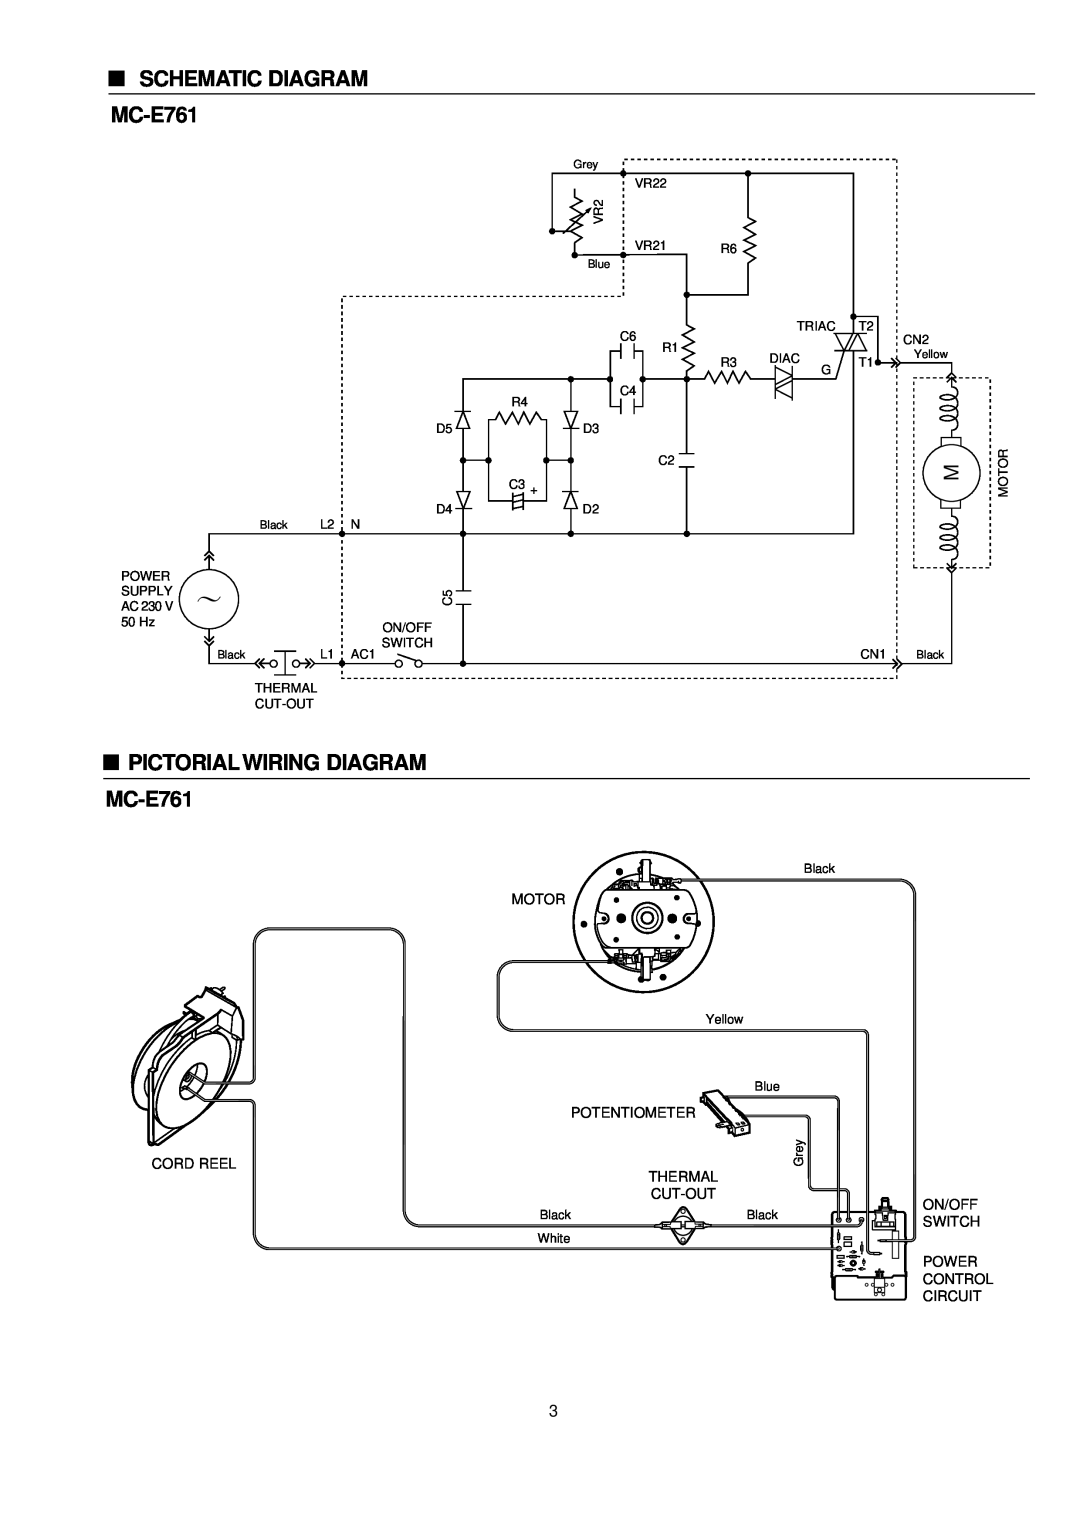 Panasonic SCHEMATIC DIAGRAM MC-E761, PICTORIALWIRING DIAGRAM MC-E761, Motor, POWER SUPPLY AC 230 V 50 Hz, On/Off Switch 